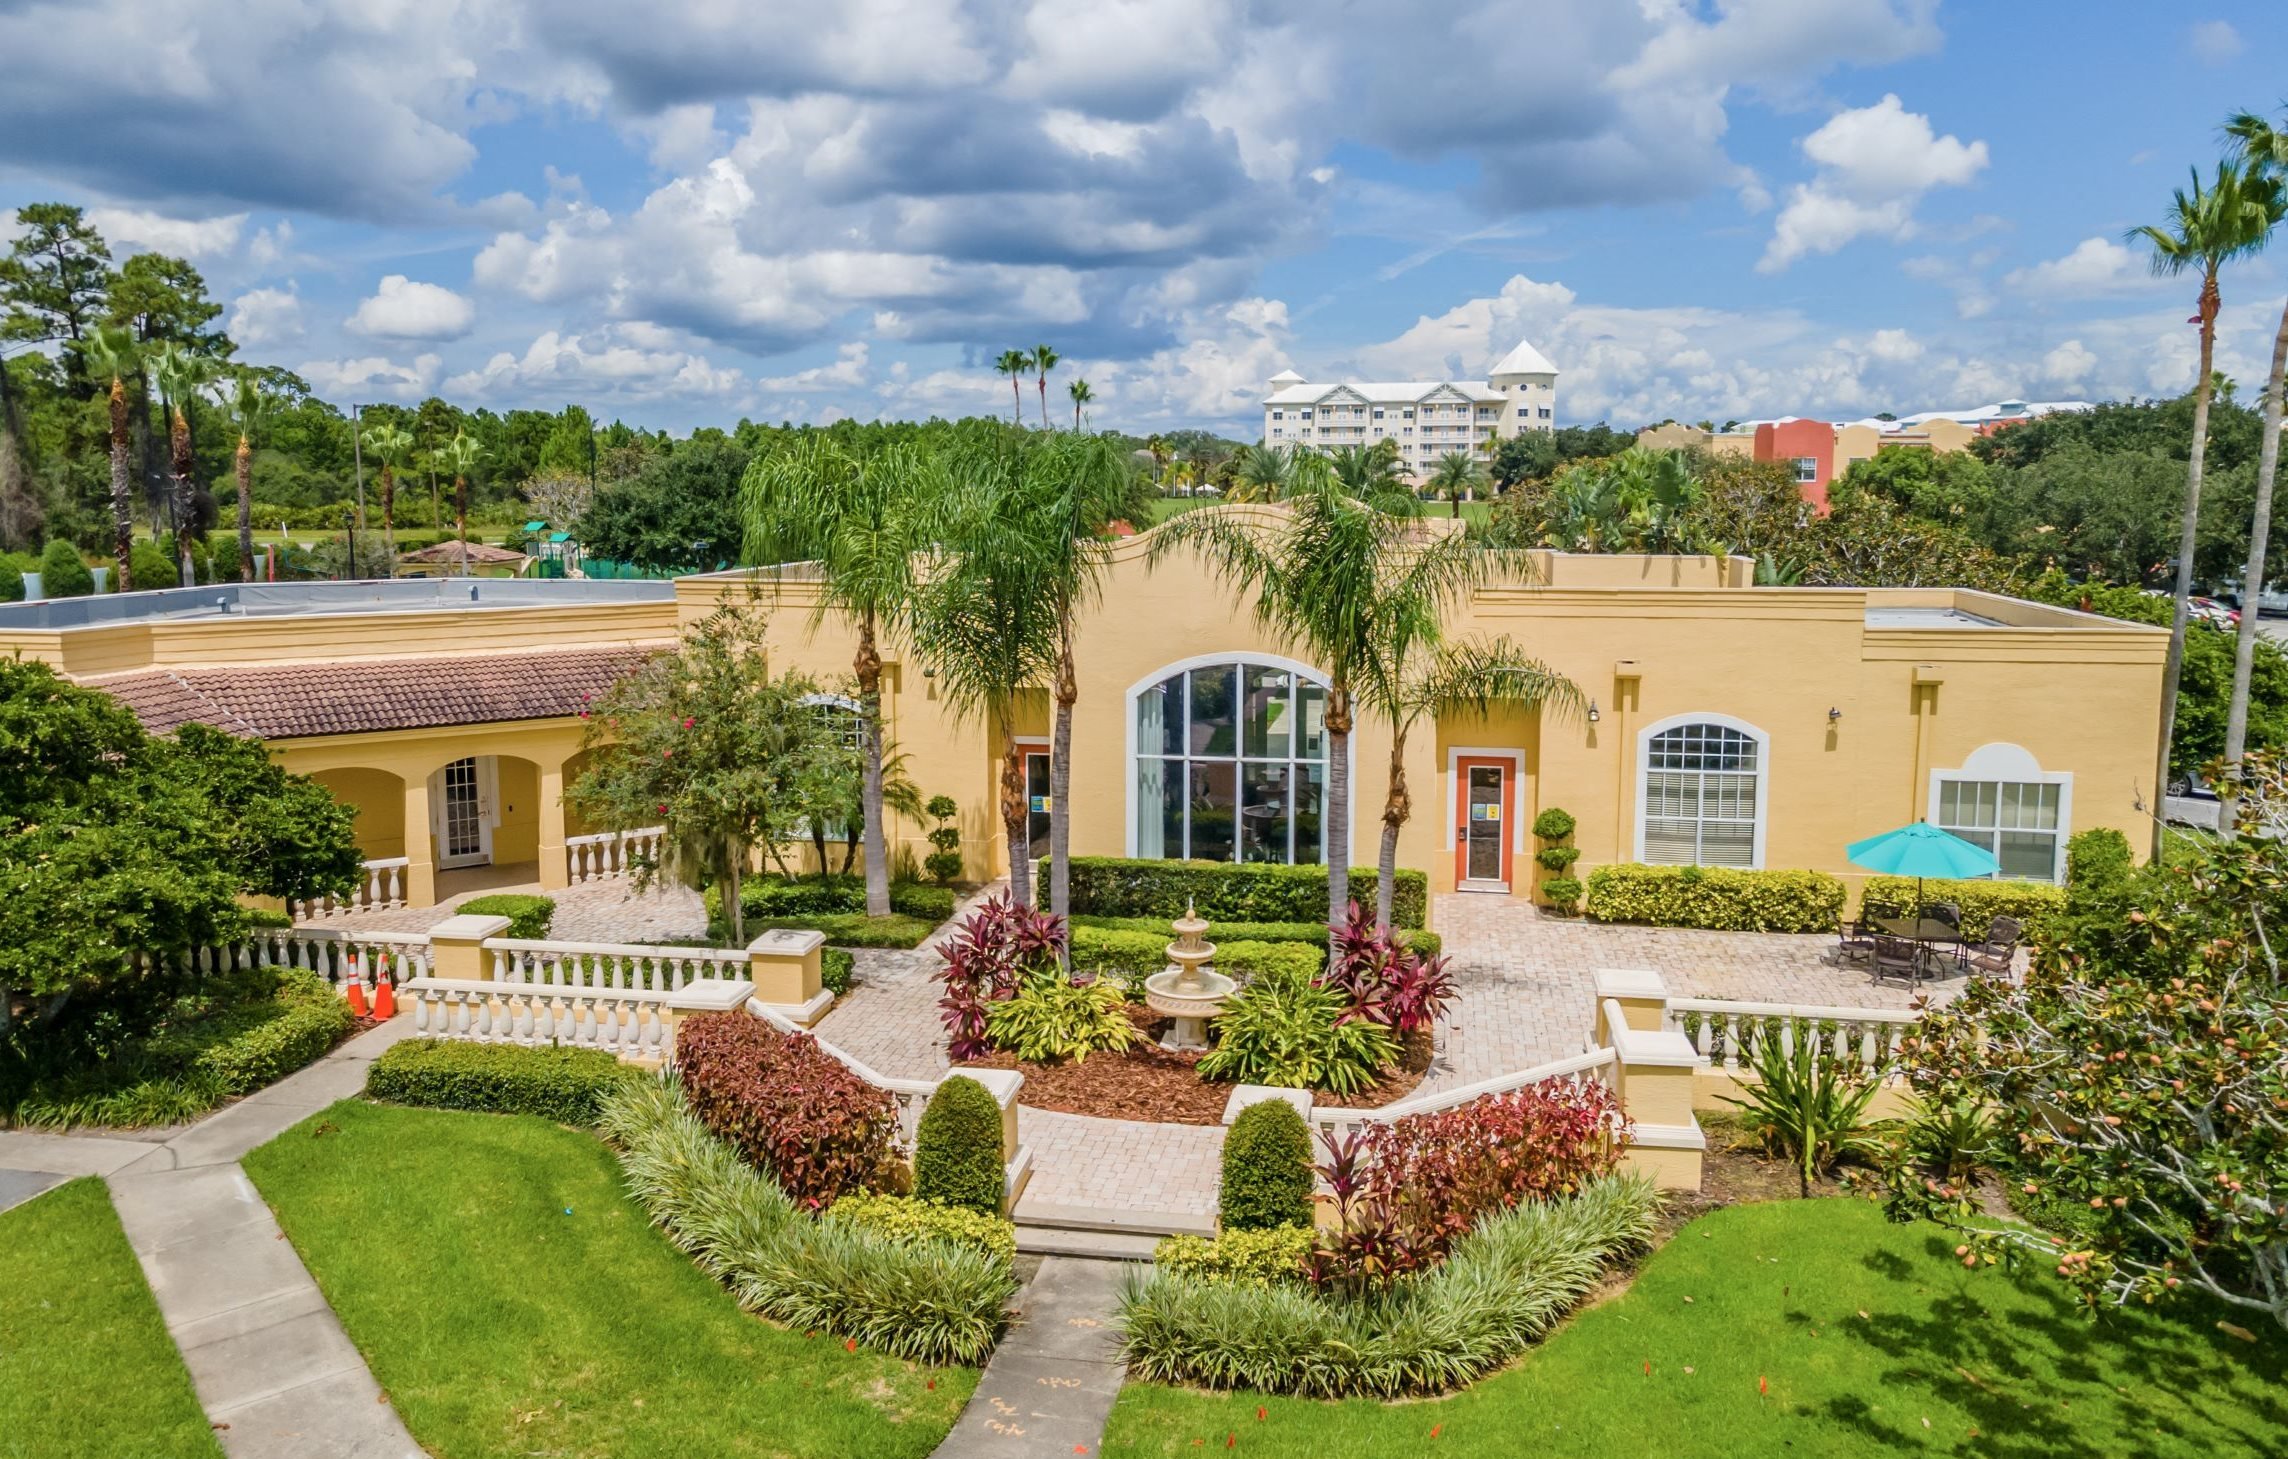 Exterior Views of Mission Club Apartments in Orlando, FL